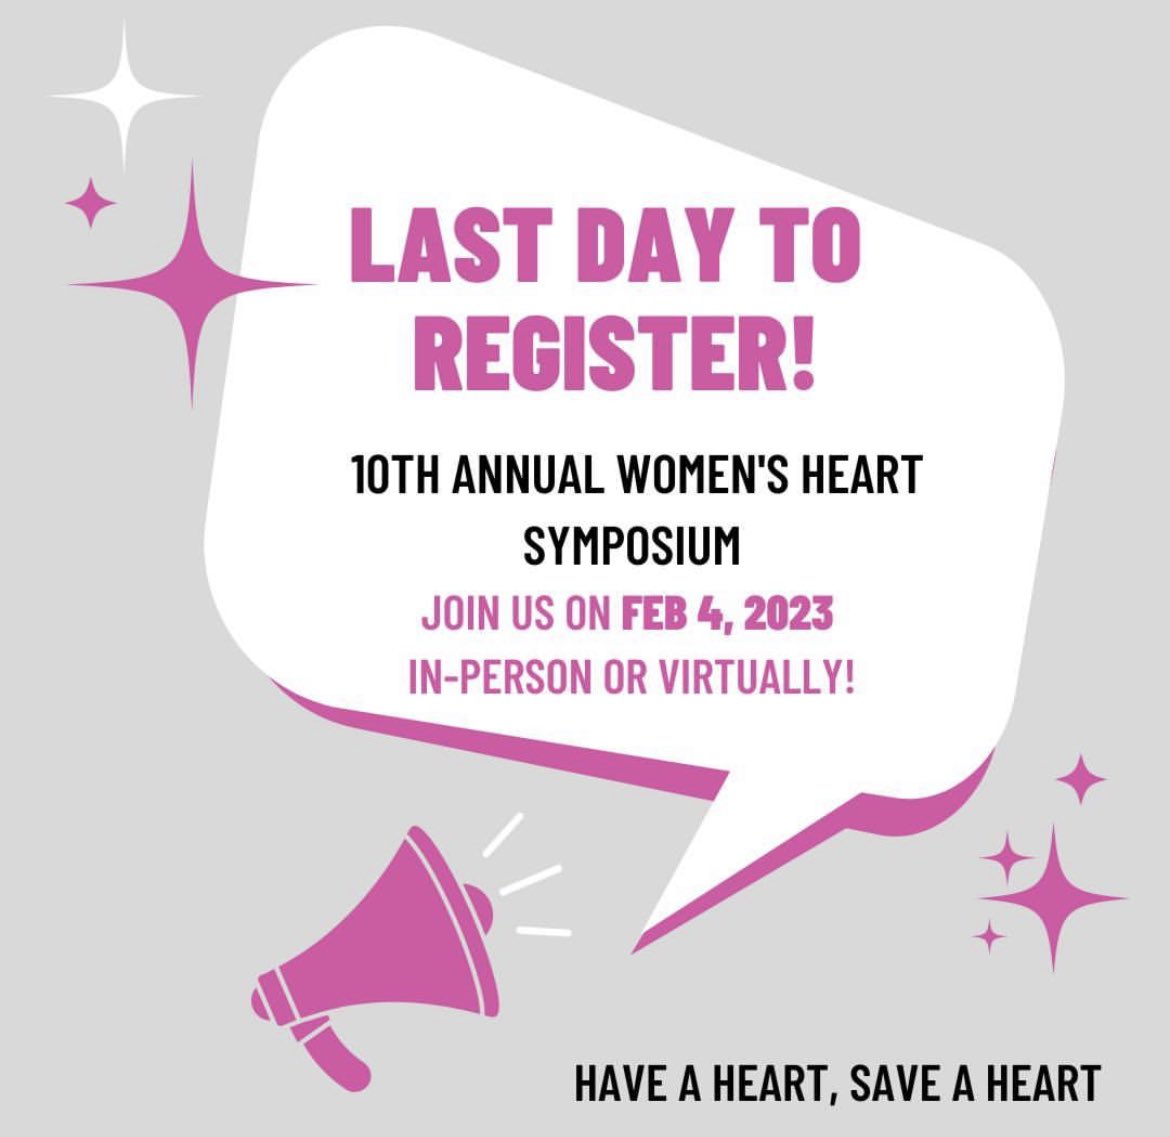 Today is the last day to register! eventbrite.com/e/10th-annual-…